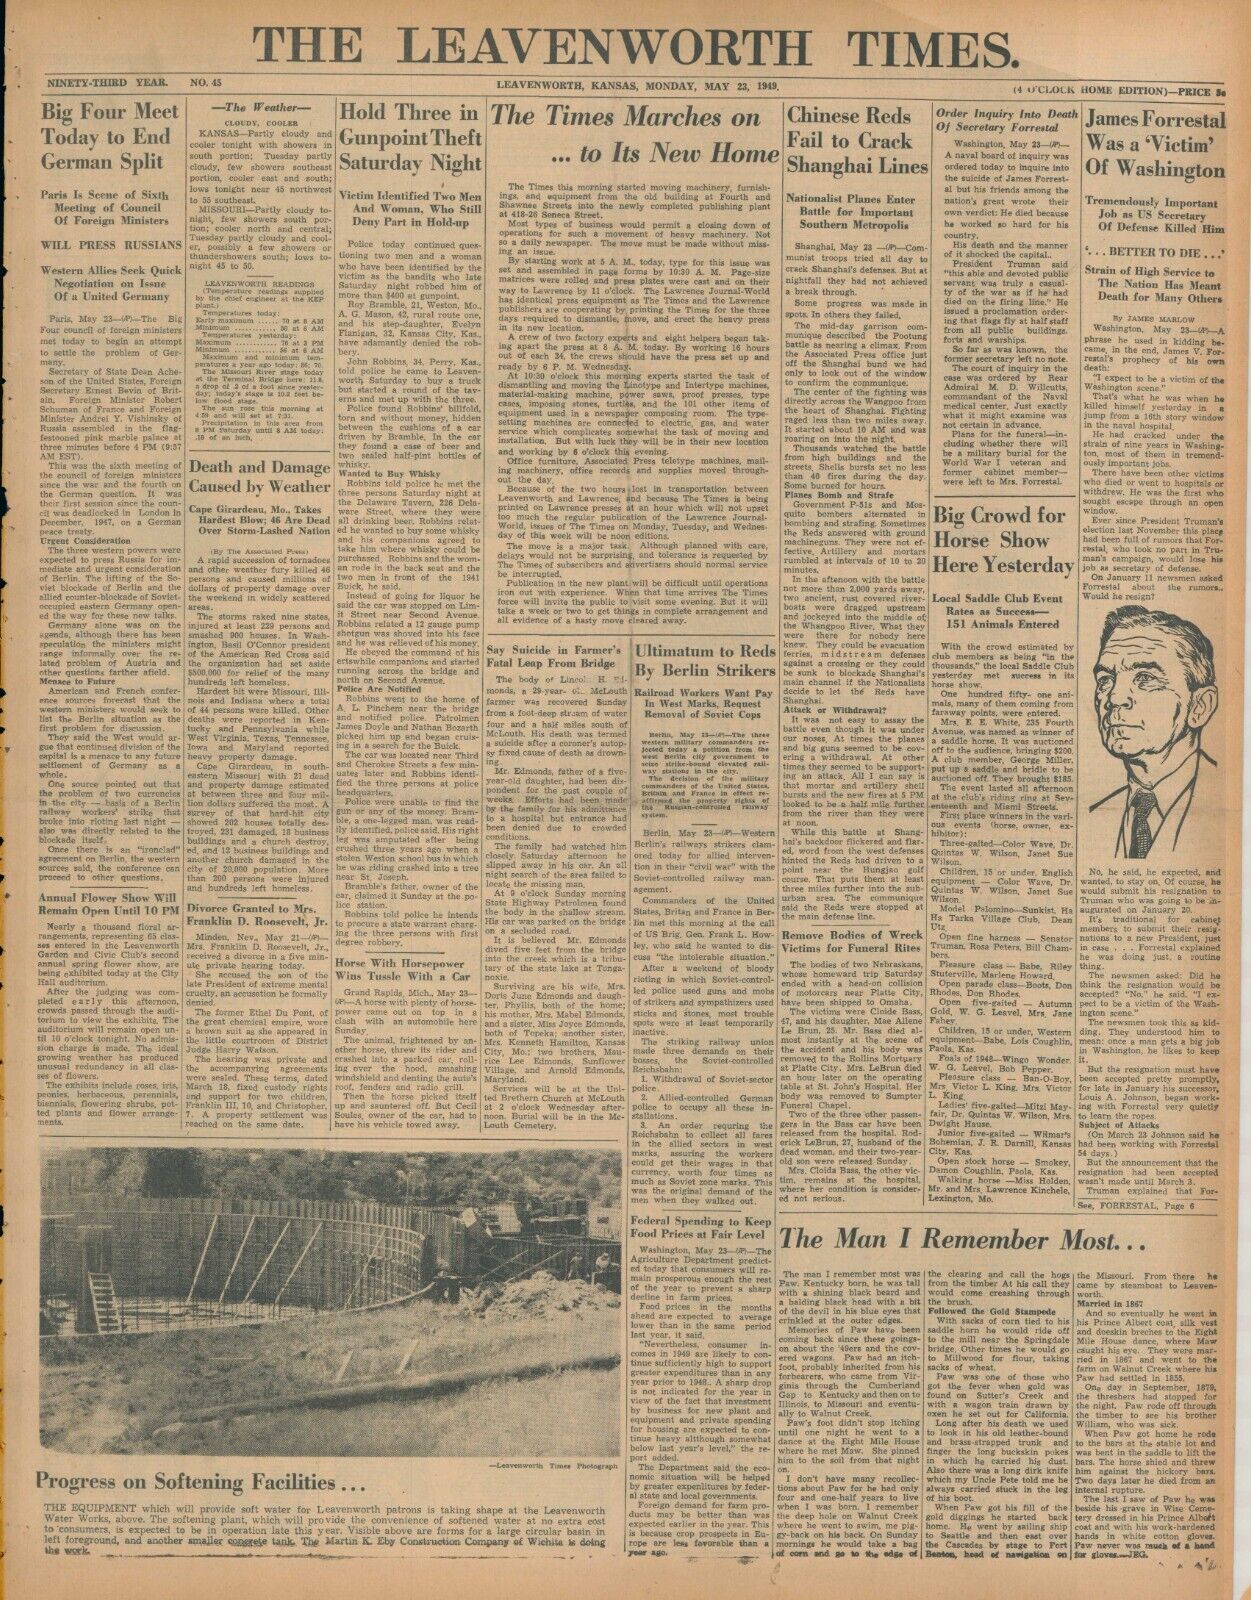 James Forrestal Suicide . US Secretary of Defense . May 23 1948 B40